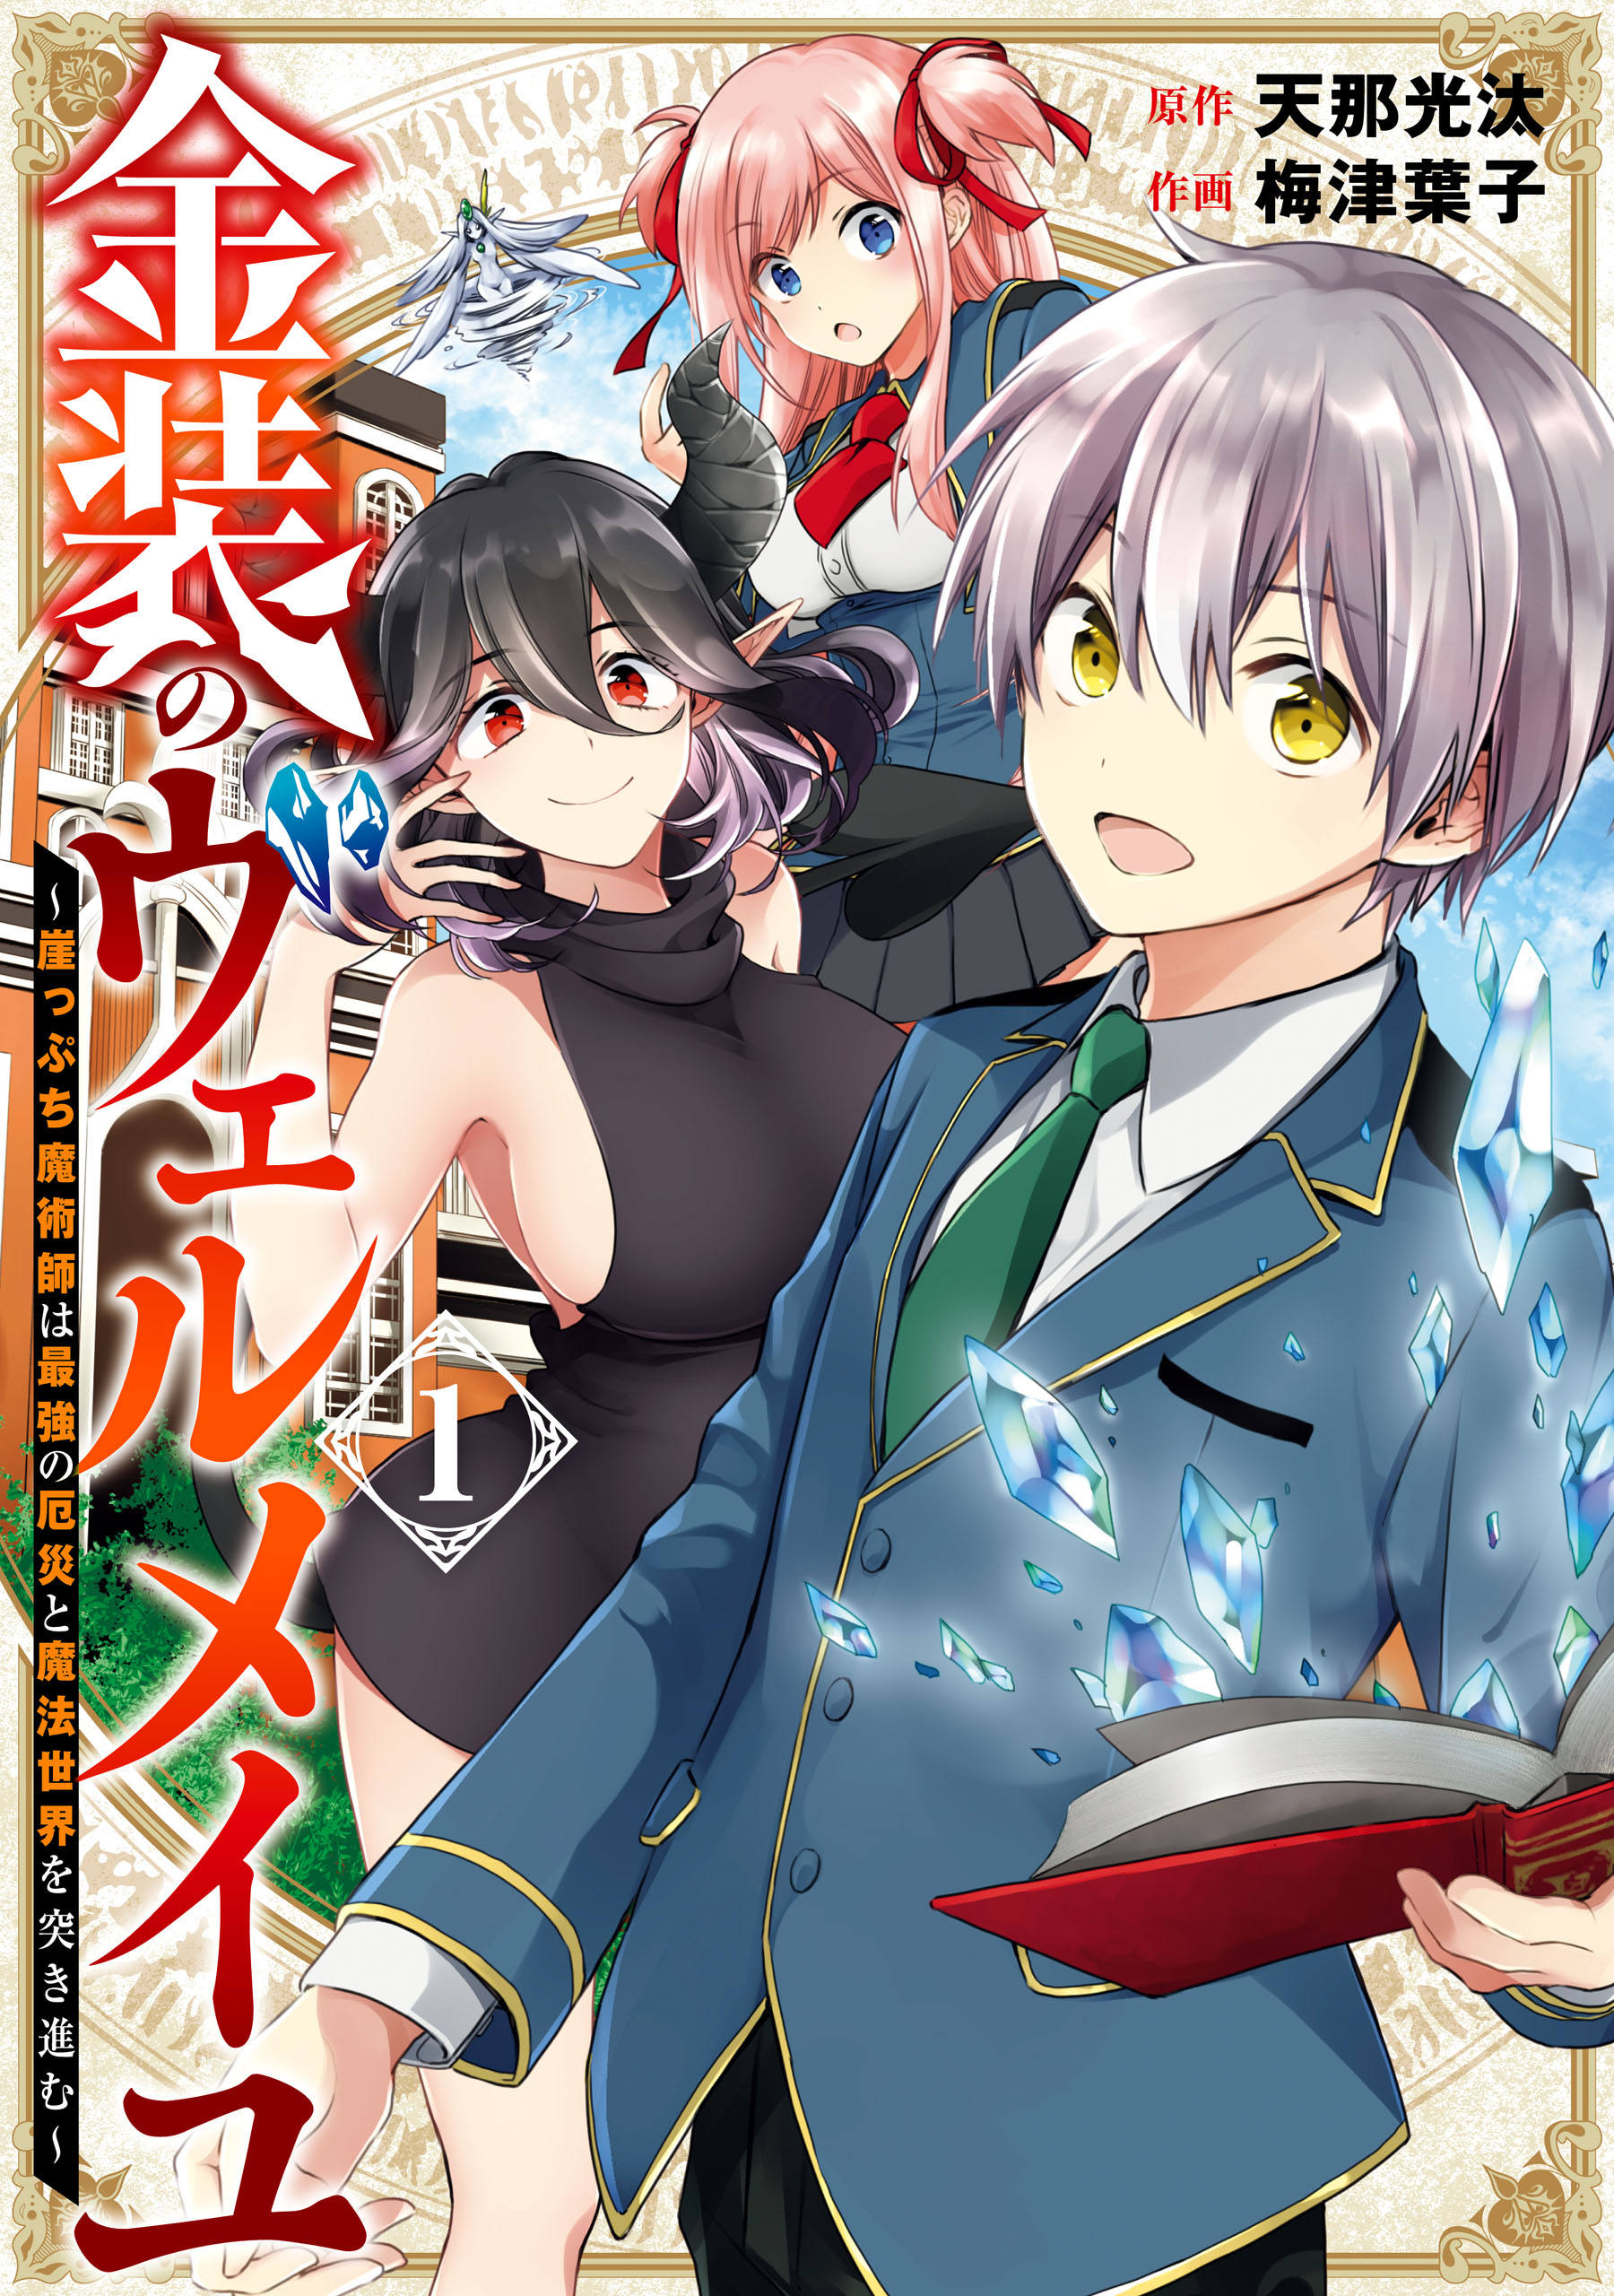 Kinsō no Vermeil Fantasy Manga Gets TV Anime in July 2022 - QooApp News